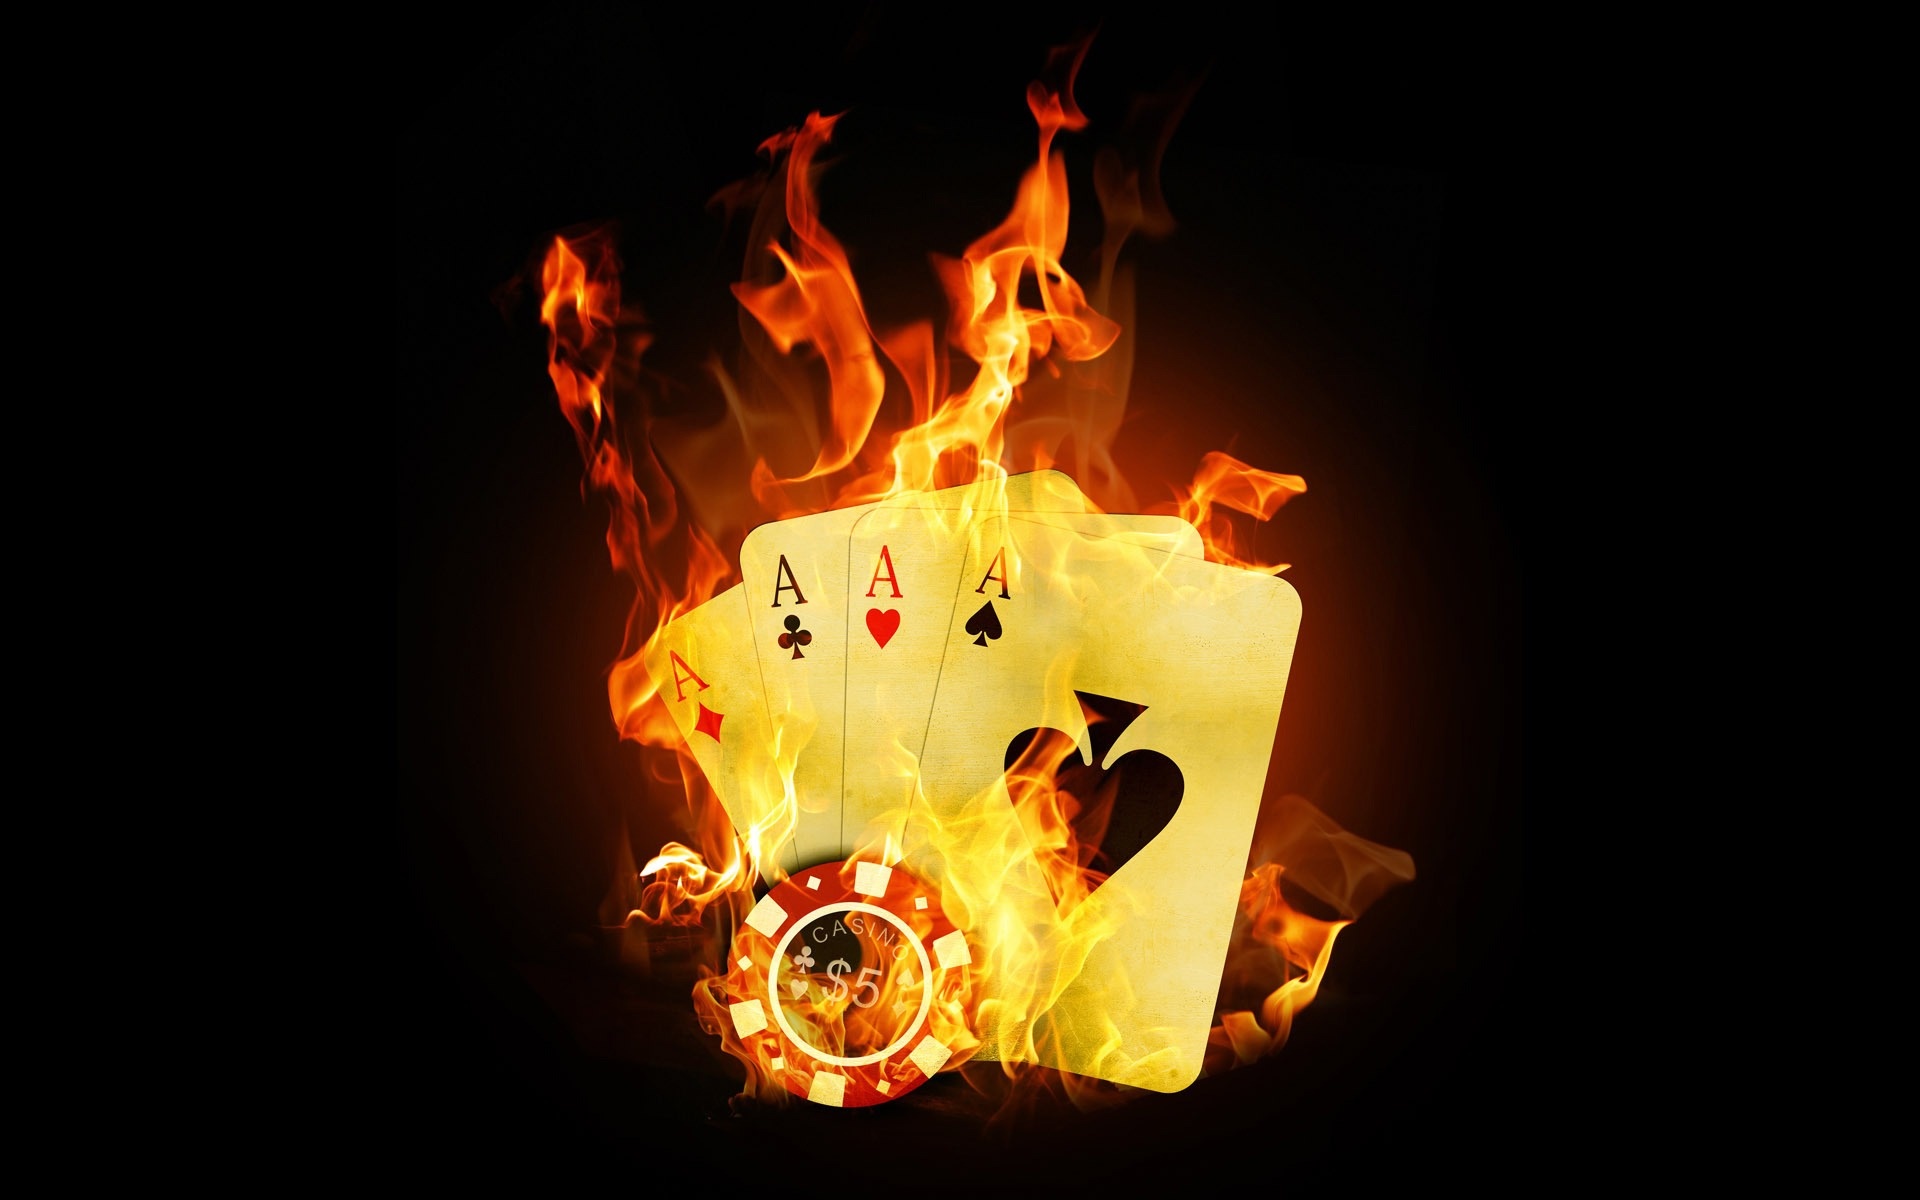 cards, flames, fire, black background - desktop wallpaper